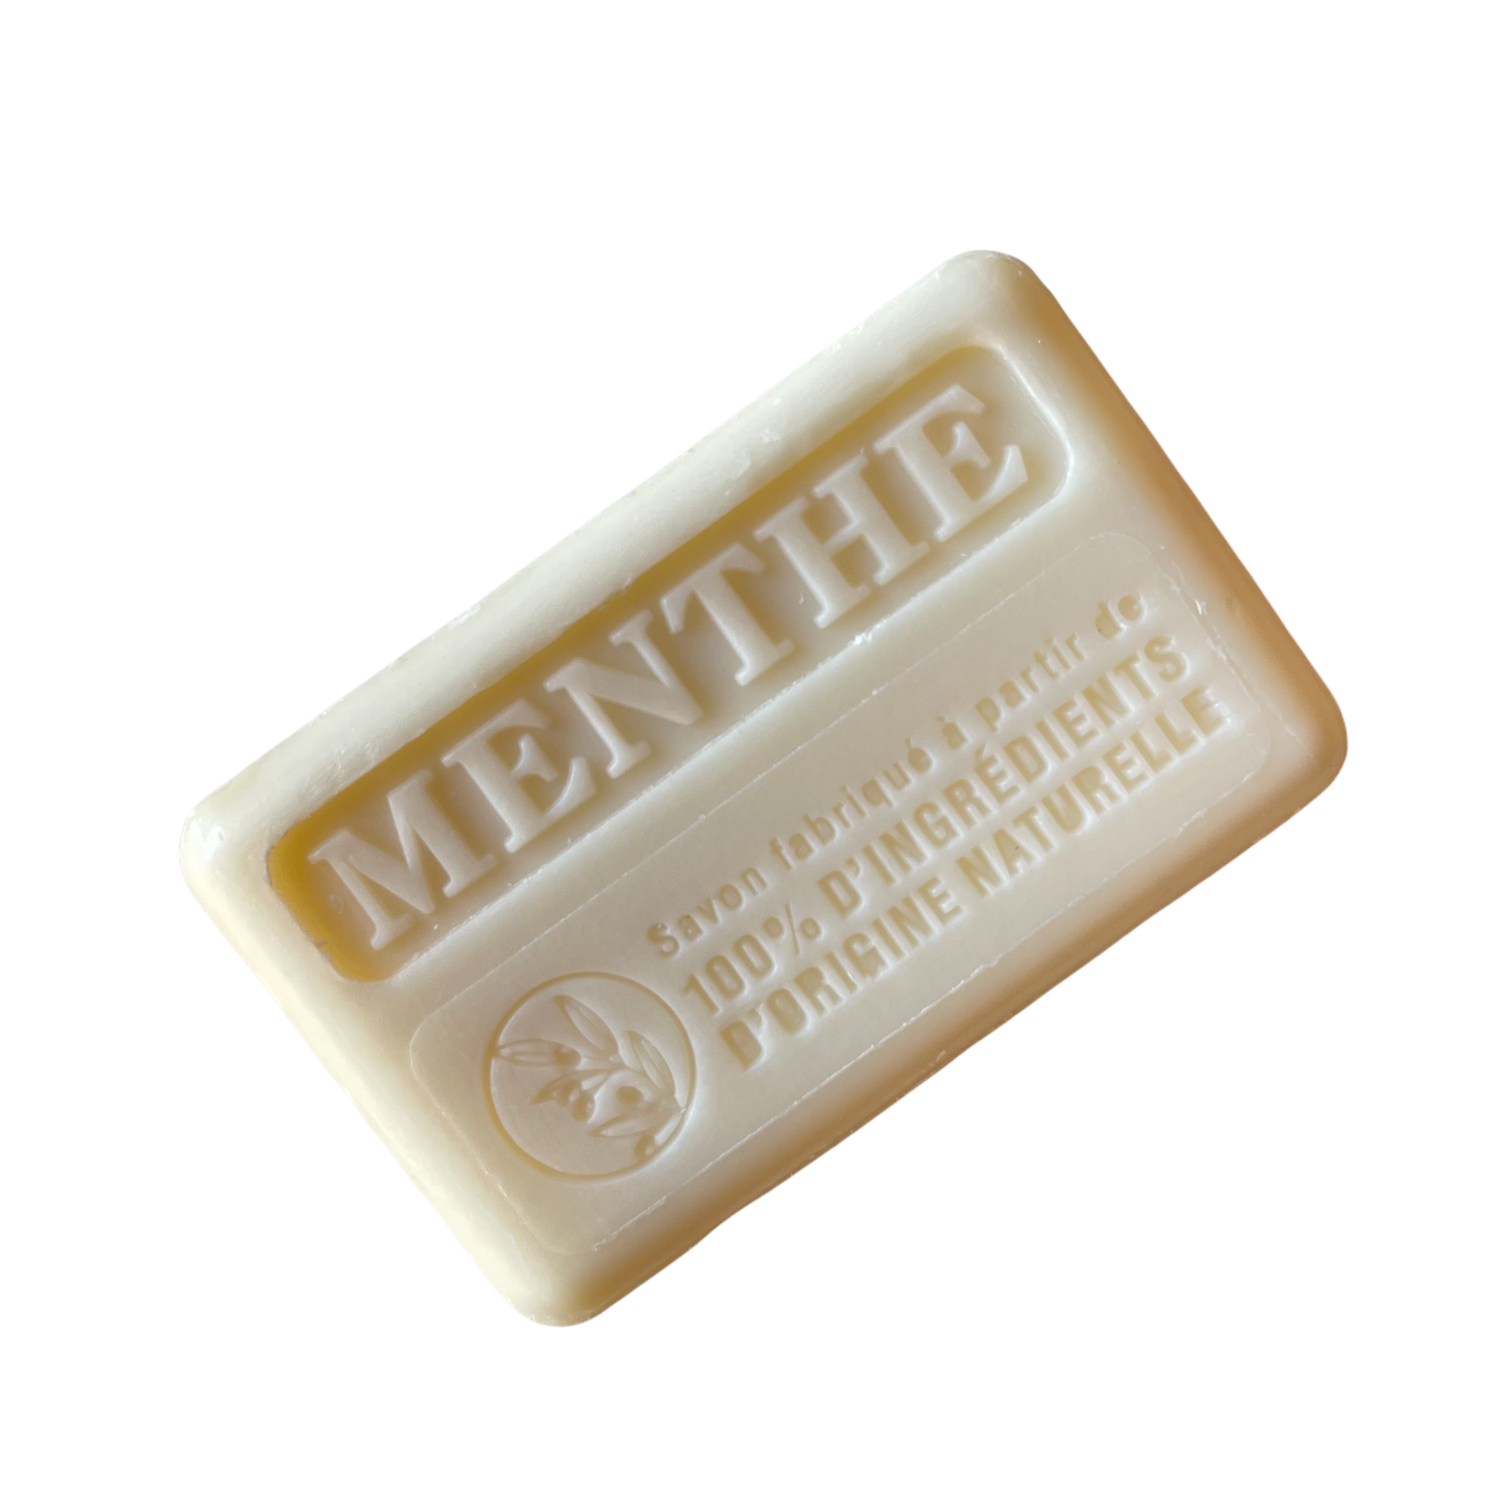 peopermint natural soap bar 